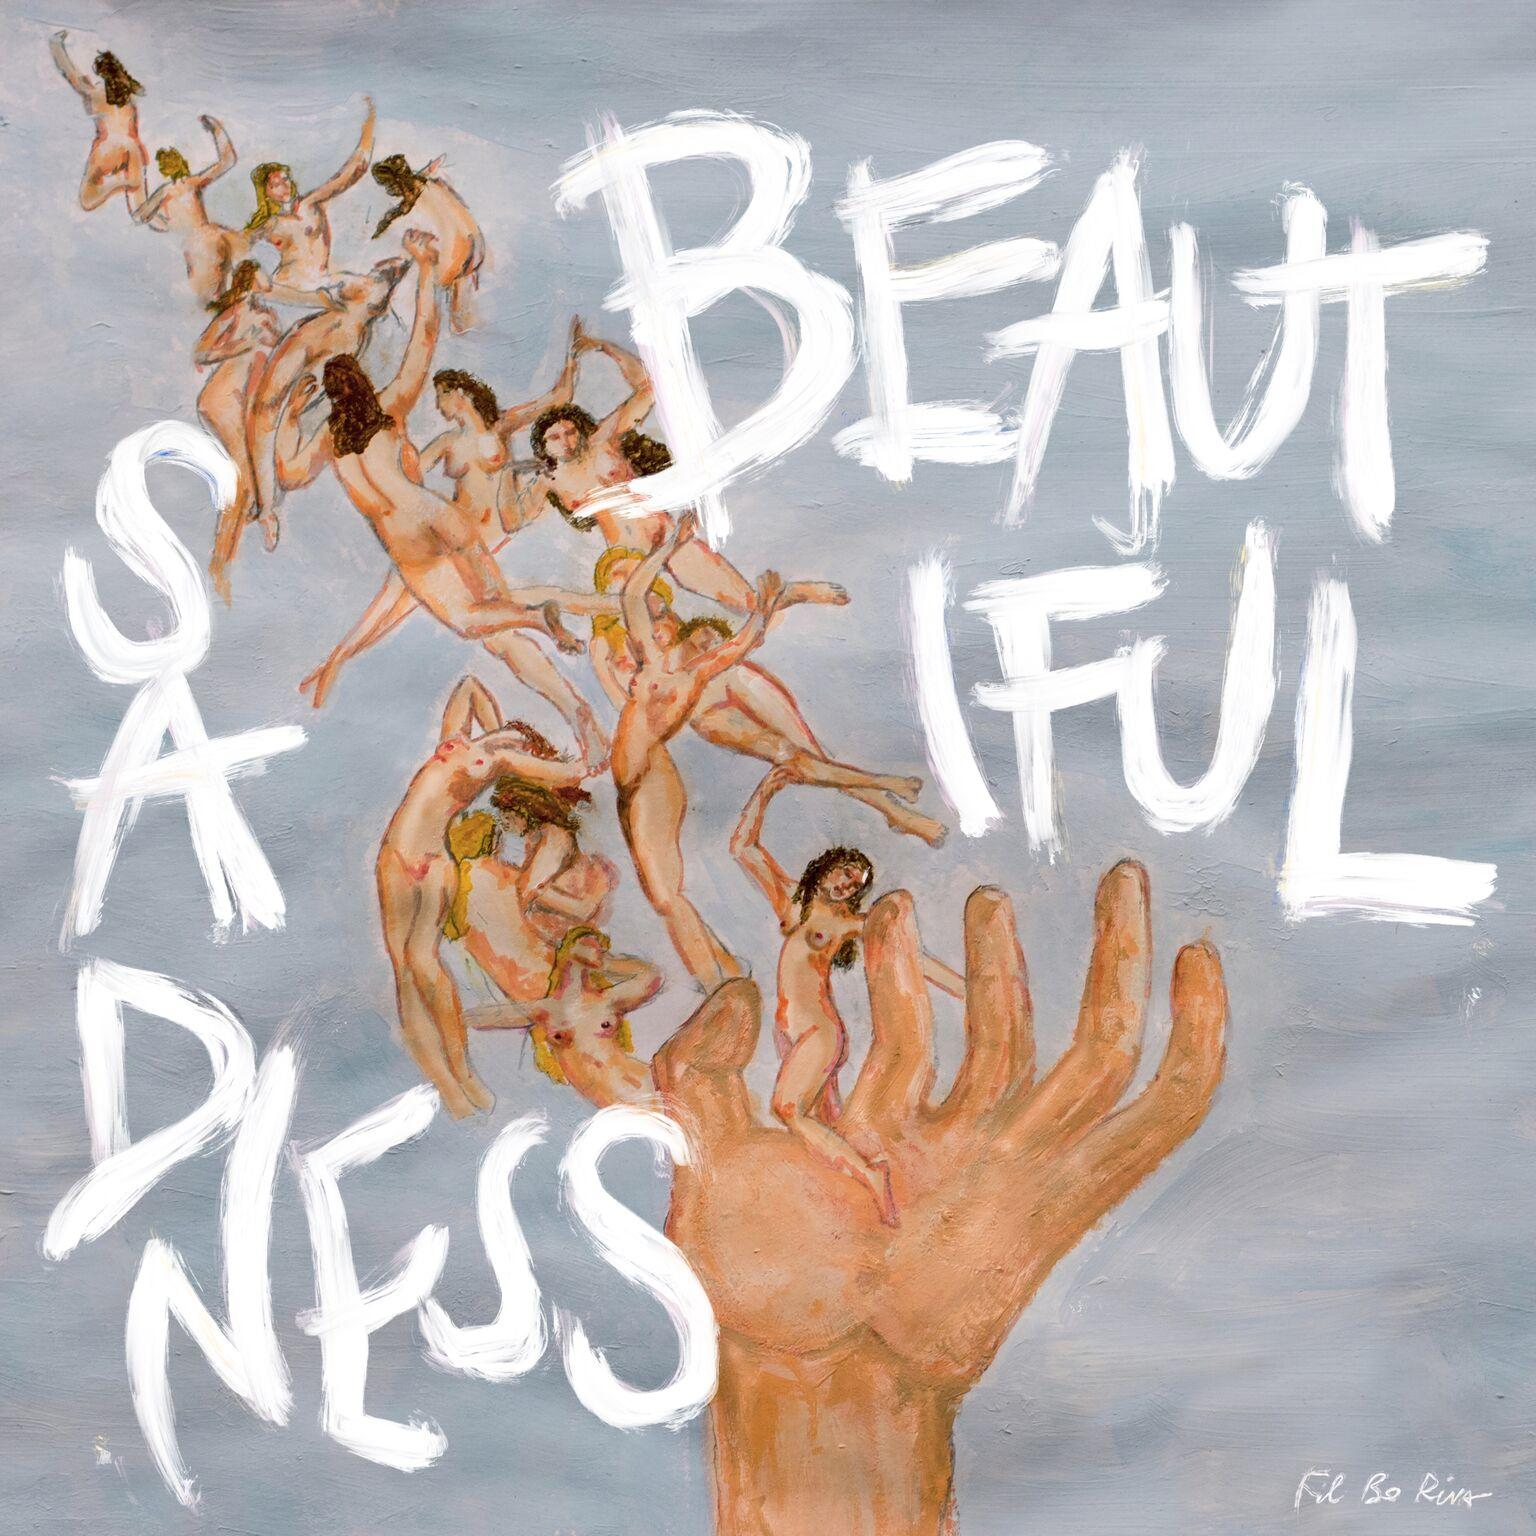 Fil Bo Riva - Beautiful (Vinyl) - Sadness